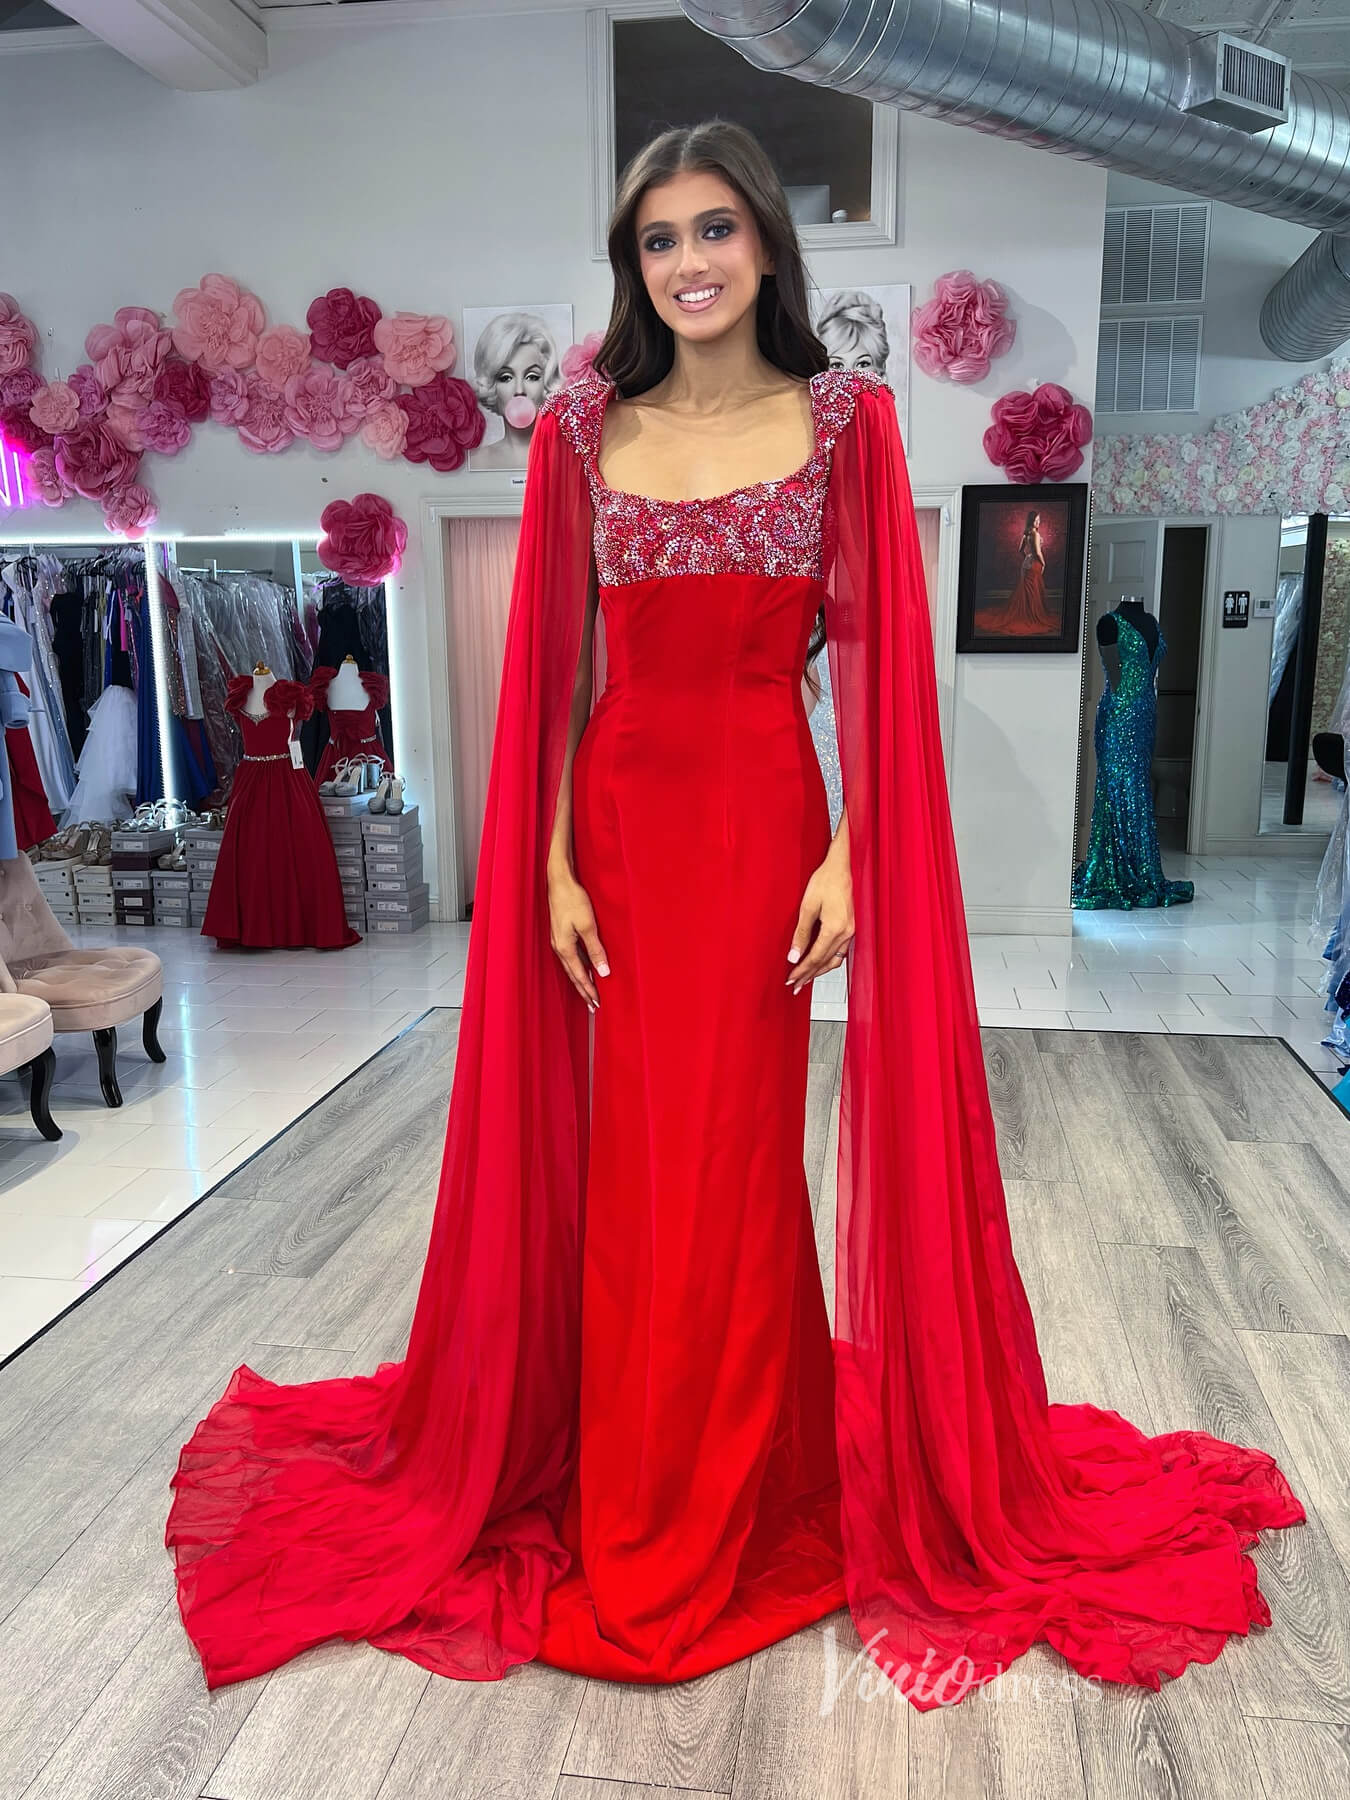 Red Satin Sheath Prom Dresses Chiffon Cape Sleeve Beaded Bodice Formal Gown FD3994-prom dresses-Viniodress-Red-Custom Size-Viniodress